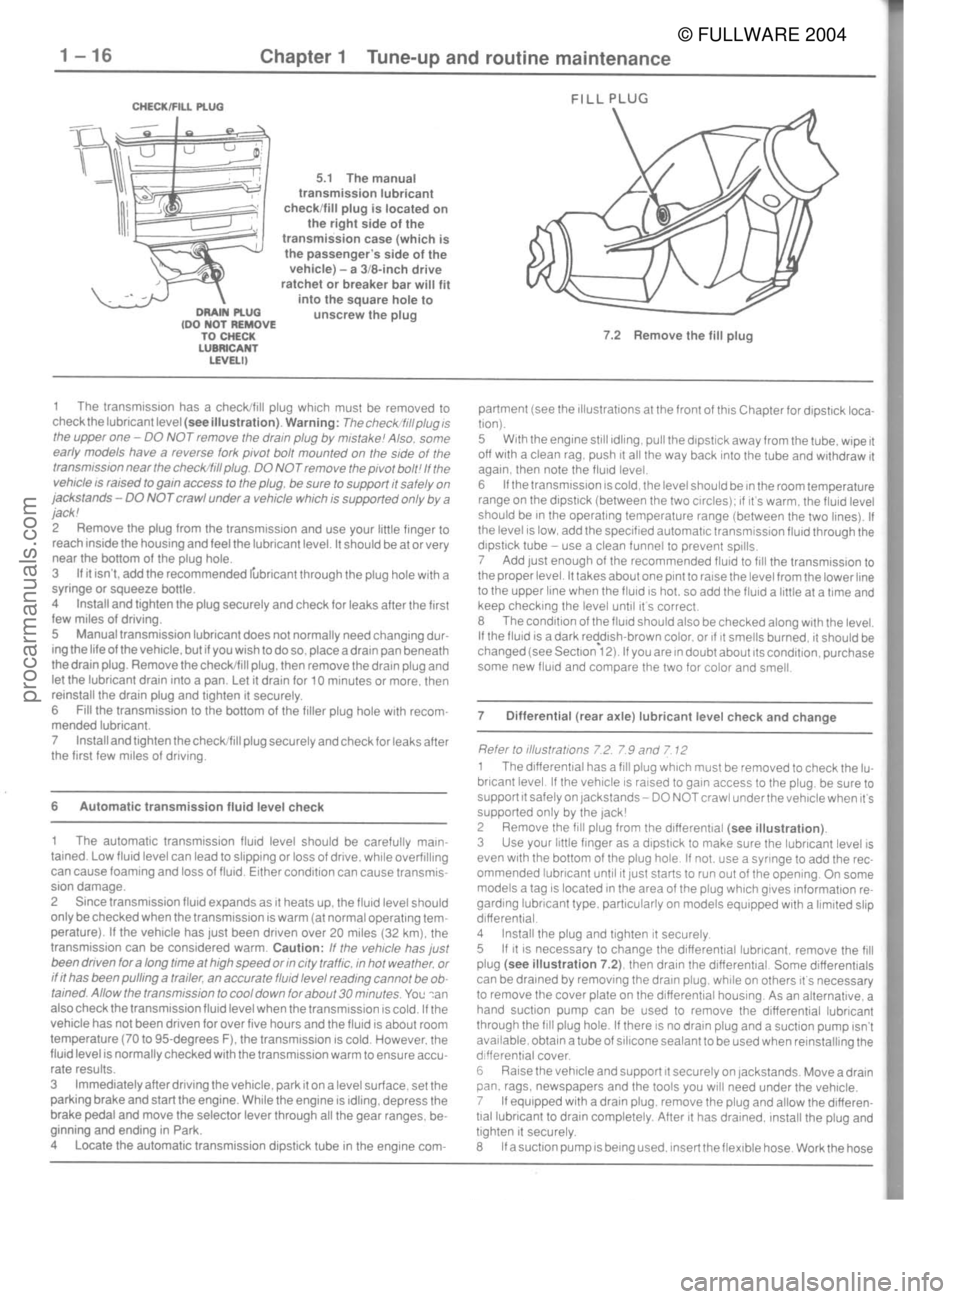 FORD MUSTANG 1979  Service Service Manual © FULLWARE 2004procarmanuals.com 